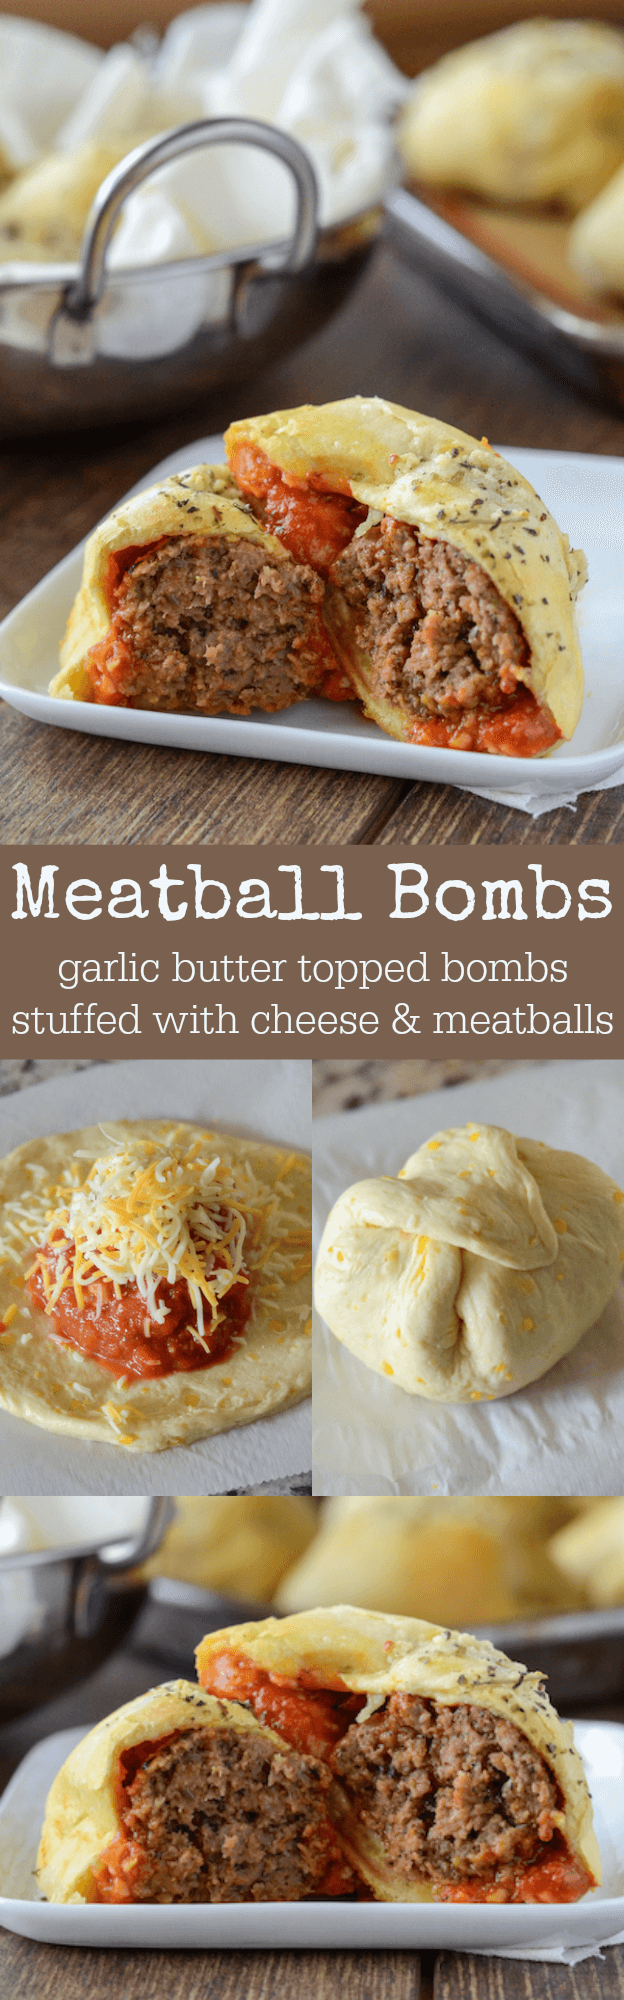 Meatball Bombs - garlic butter topped meatball & cheese stuffed bombs!